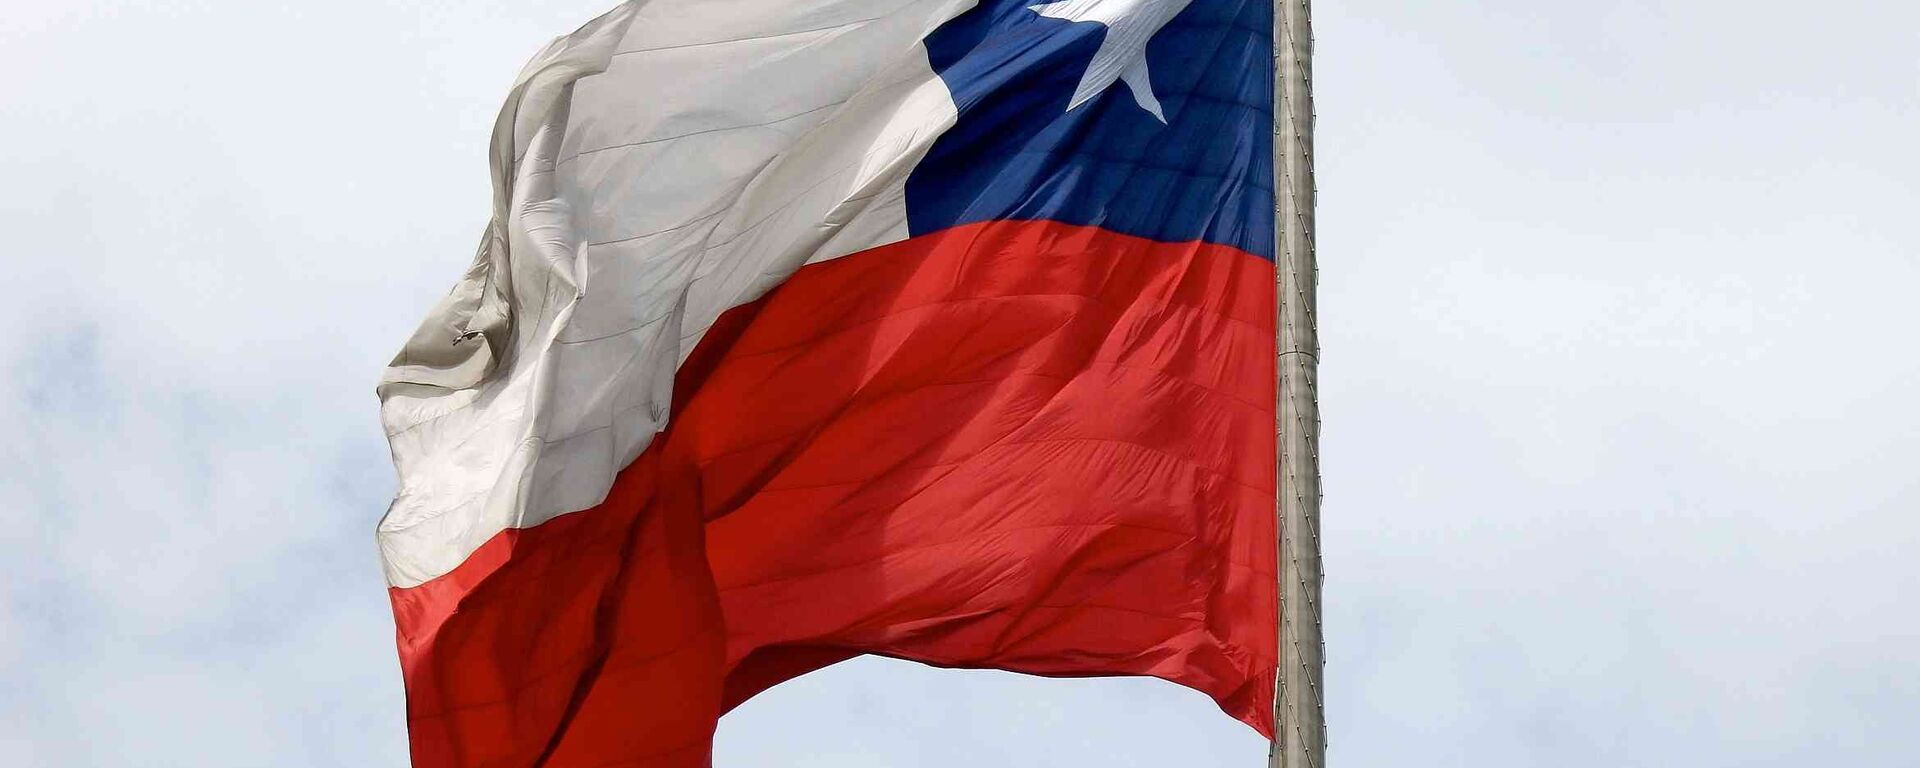 Bandera de Chile - Sputnik Mundo, 1920, 30.03.2021